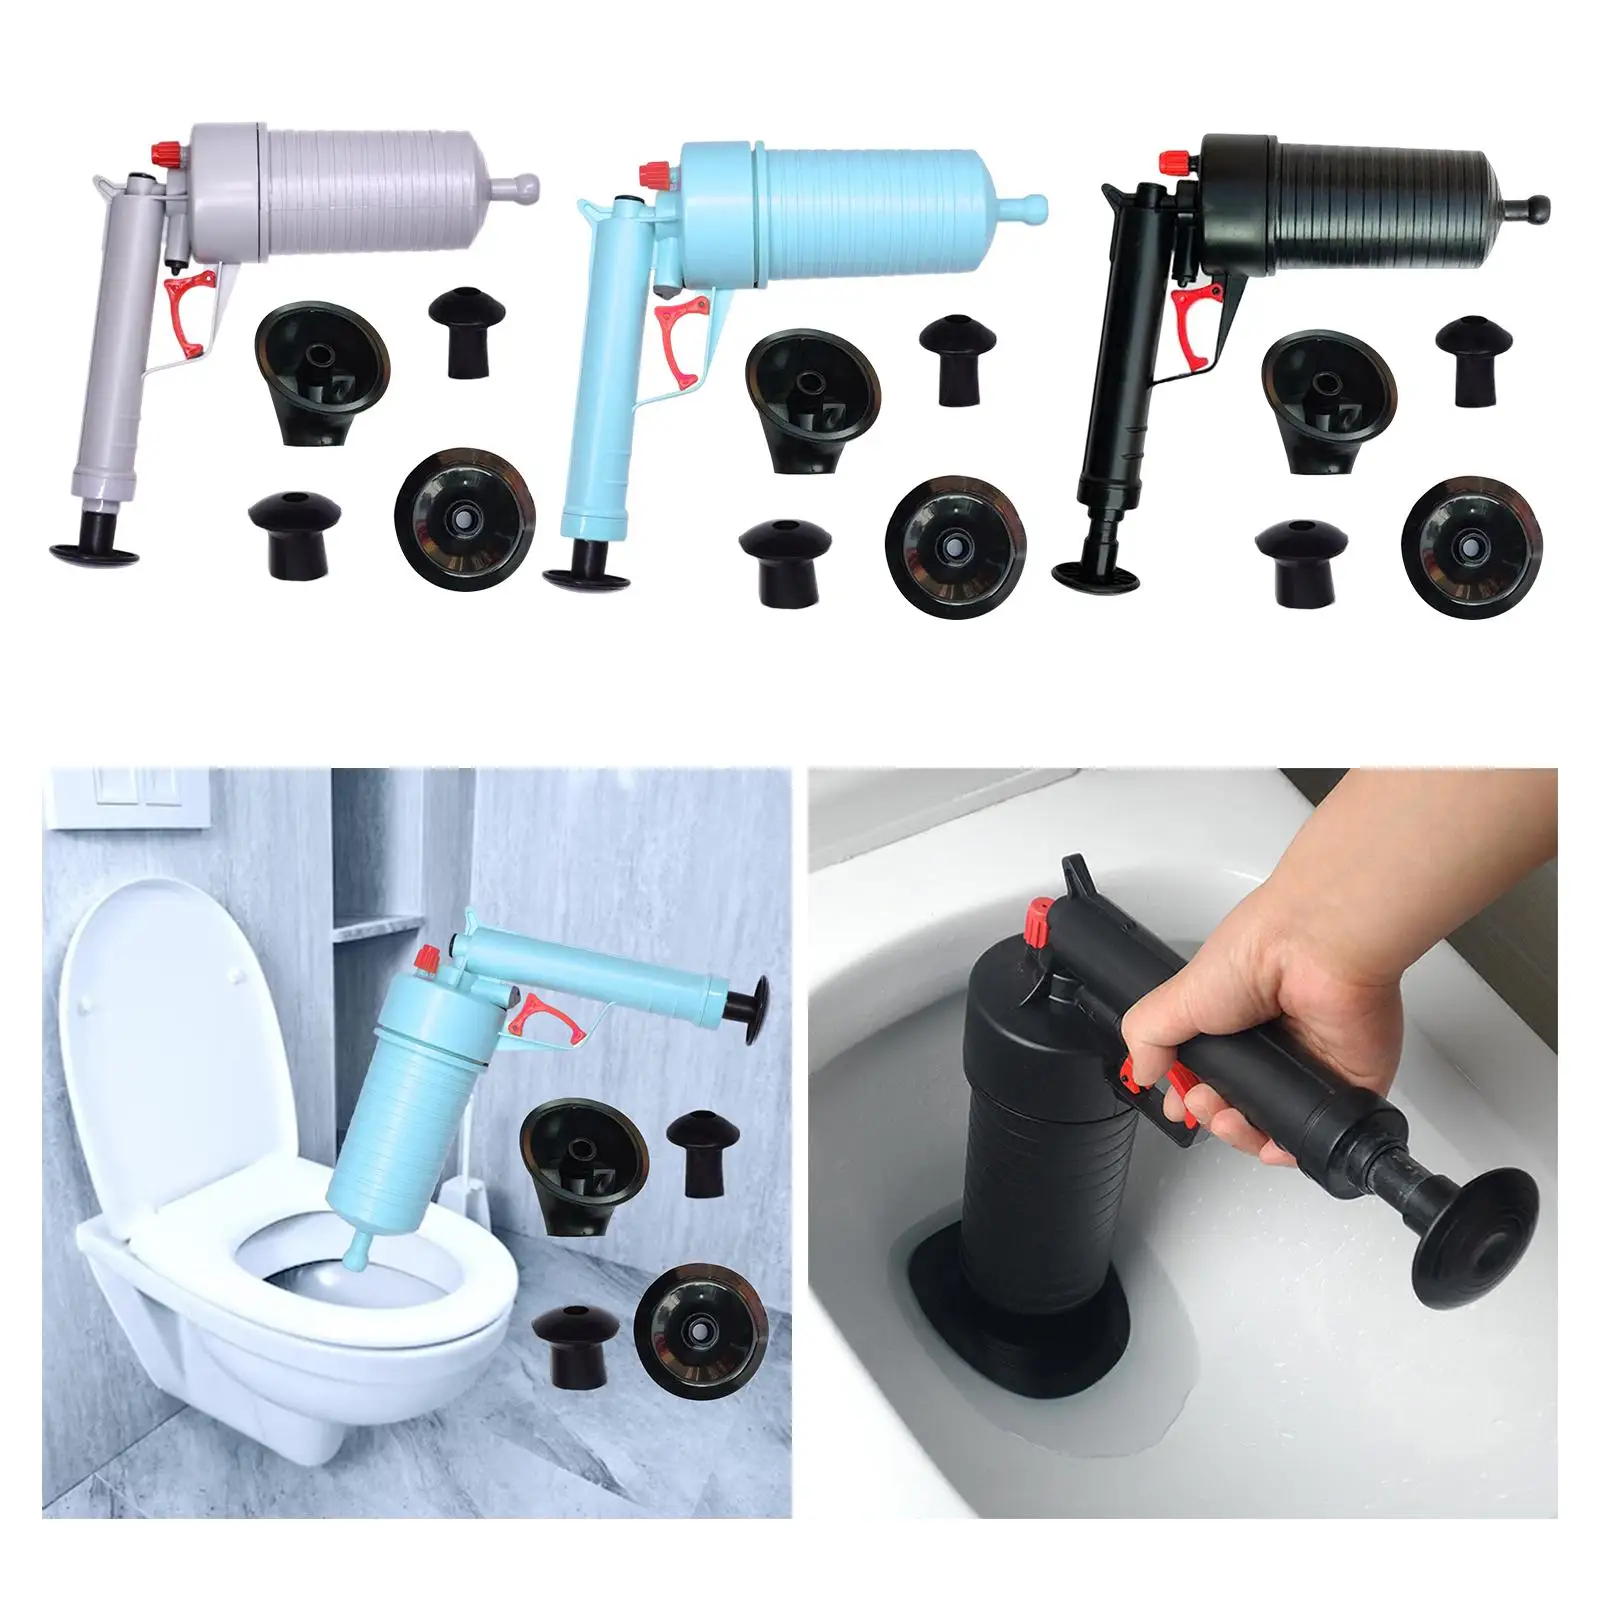 Multifunctional Toilet Plunger Tub Drain Cleaner Opener Air Pressure Drain Pump for Bathroom, Kitchen Durable Practical